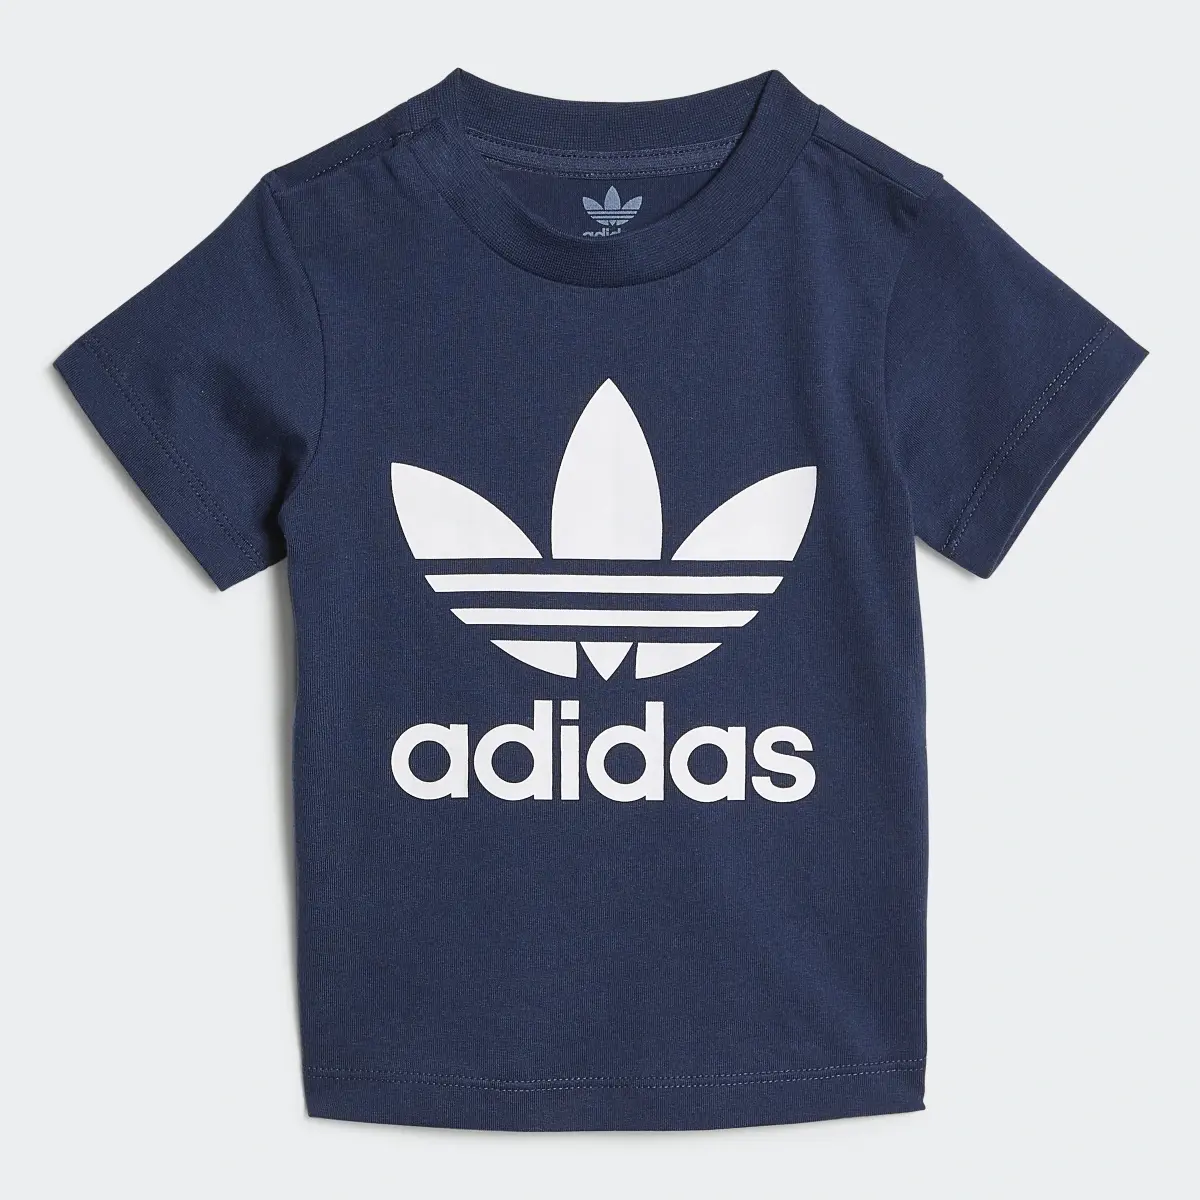 Adidas Trefoil Shorts und T-Shirt Set. 3